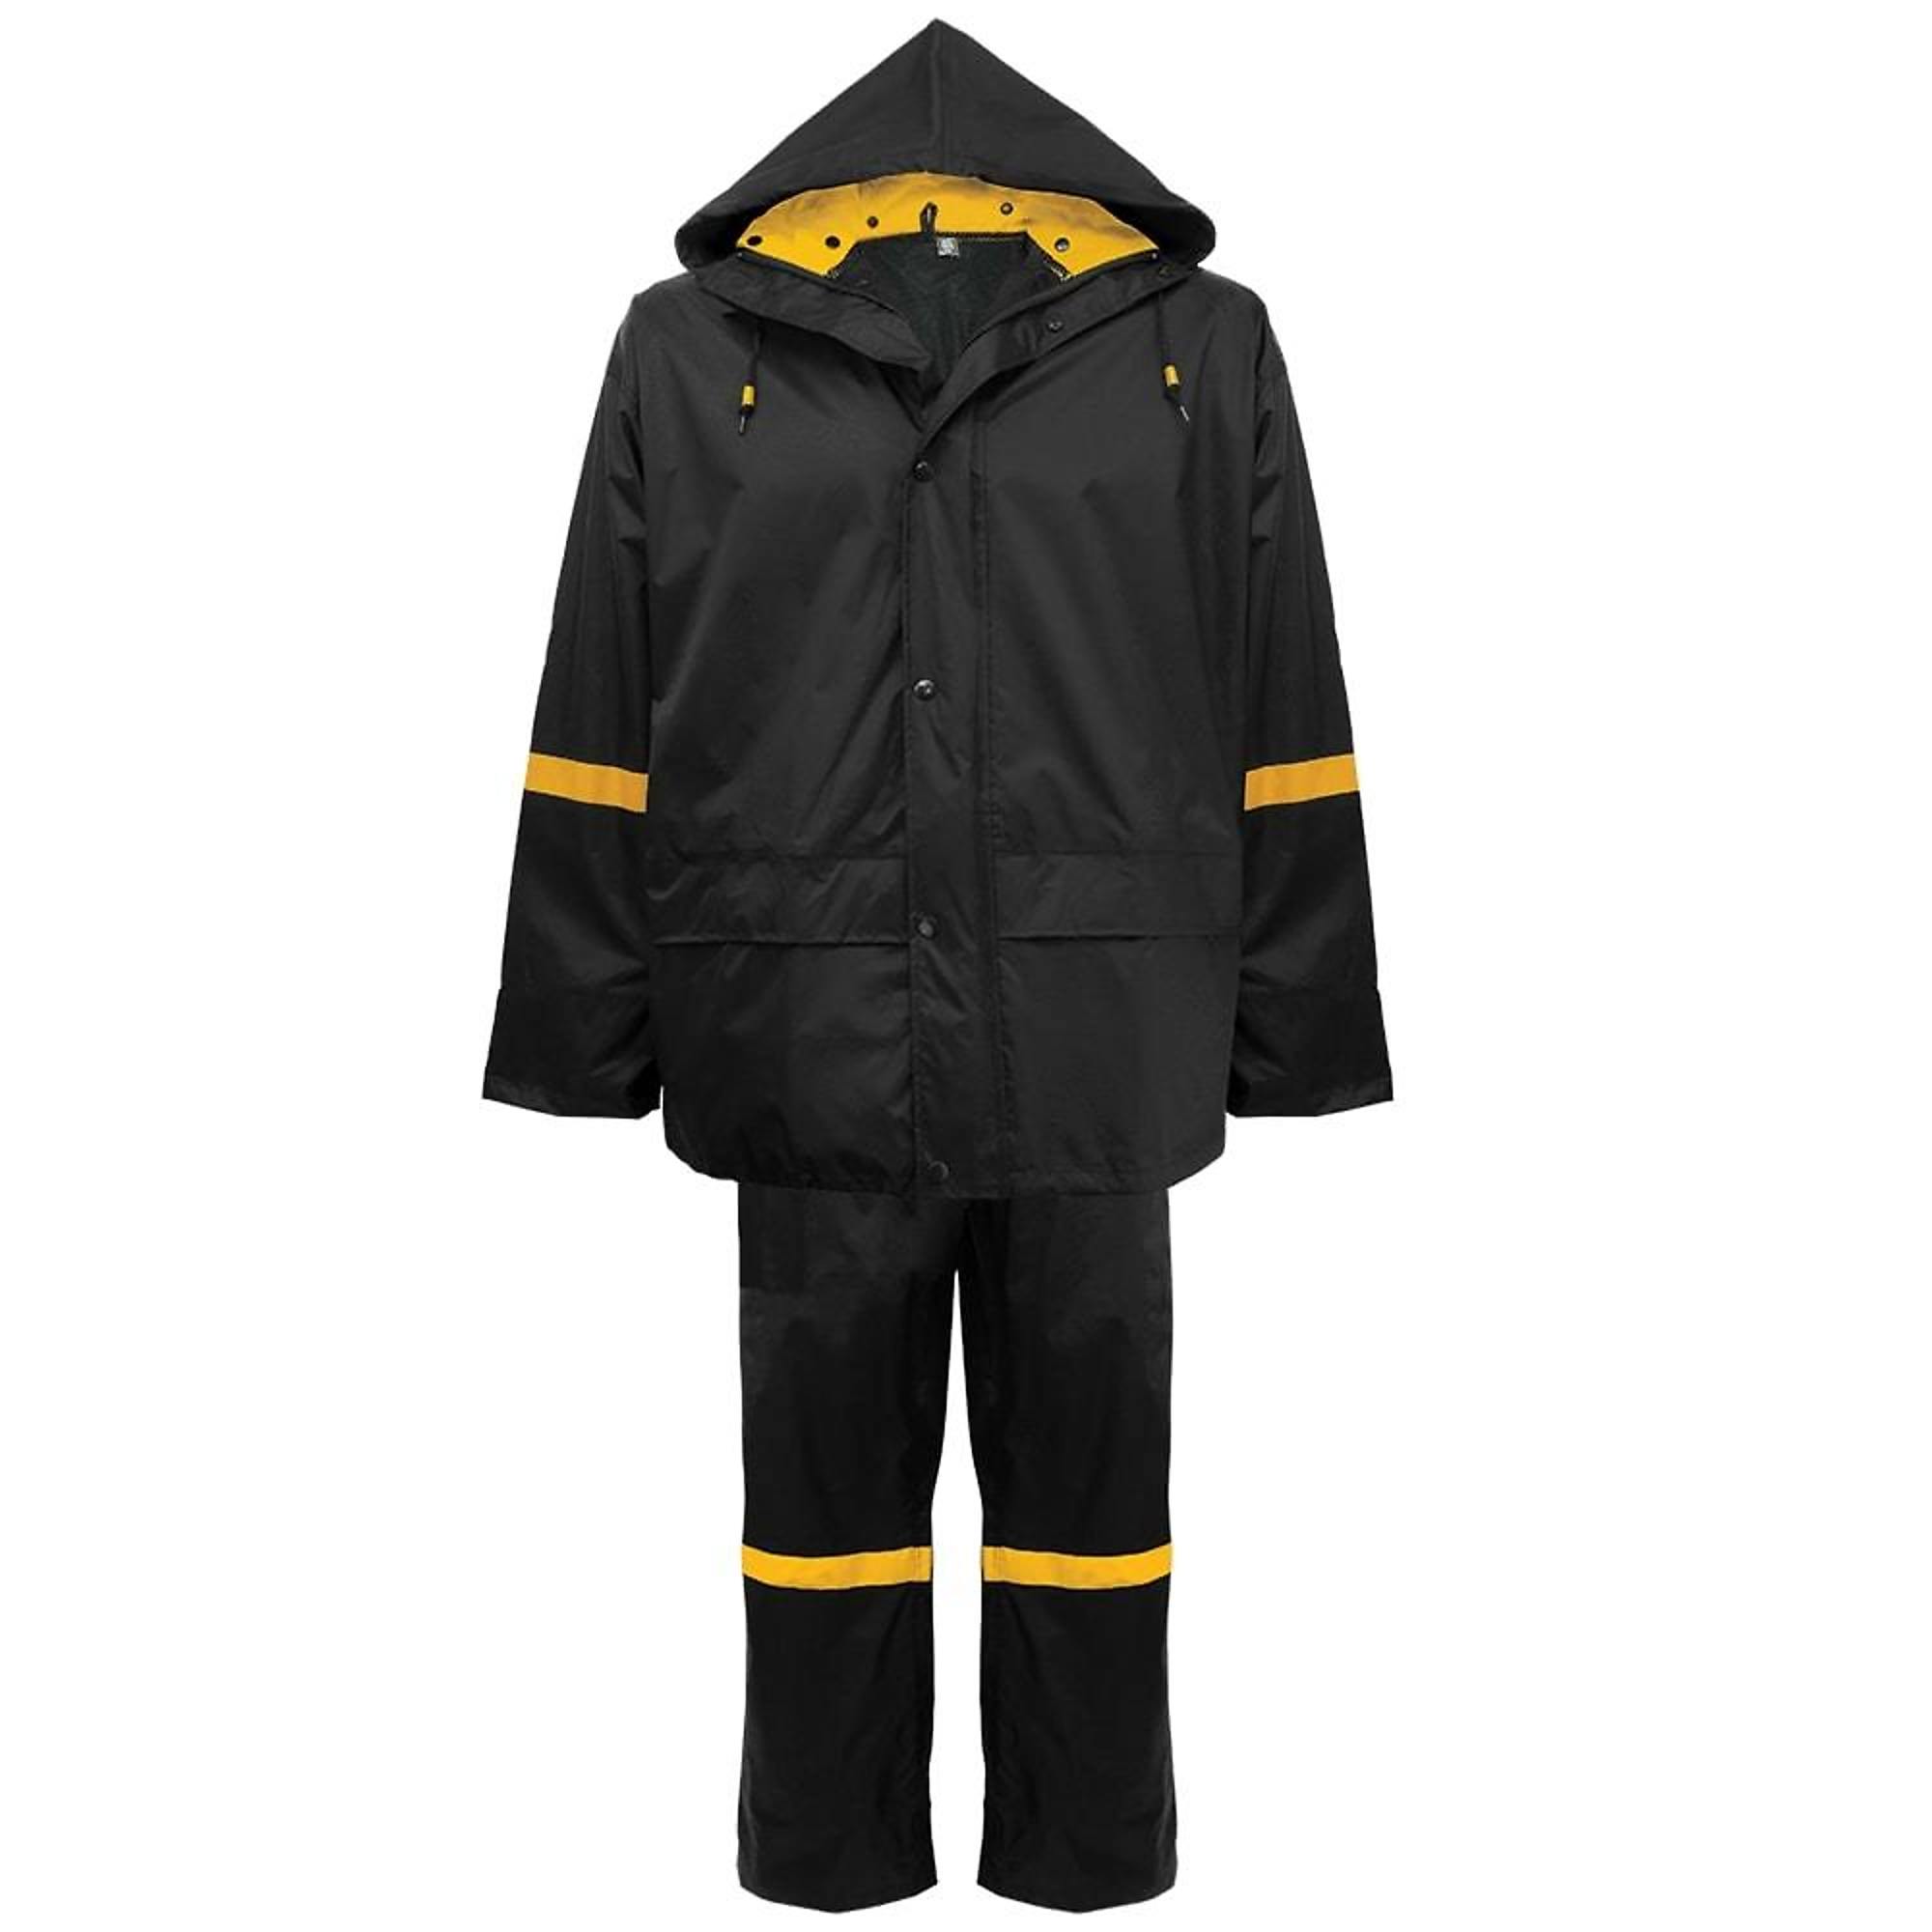 FrogWear, Black, PVC Coated, Nylon Three-Piece Rain Suit, Size S, Color Black/Yellow, Model R6400-S